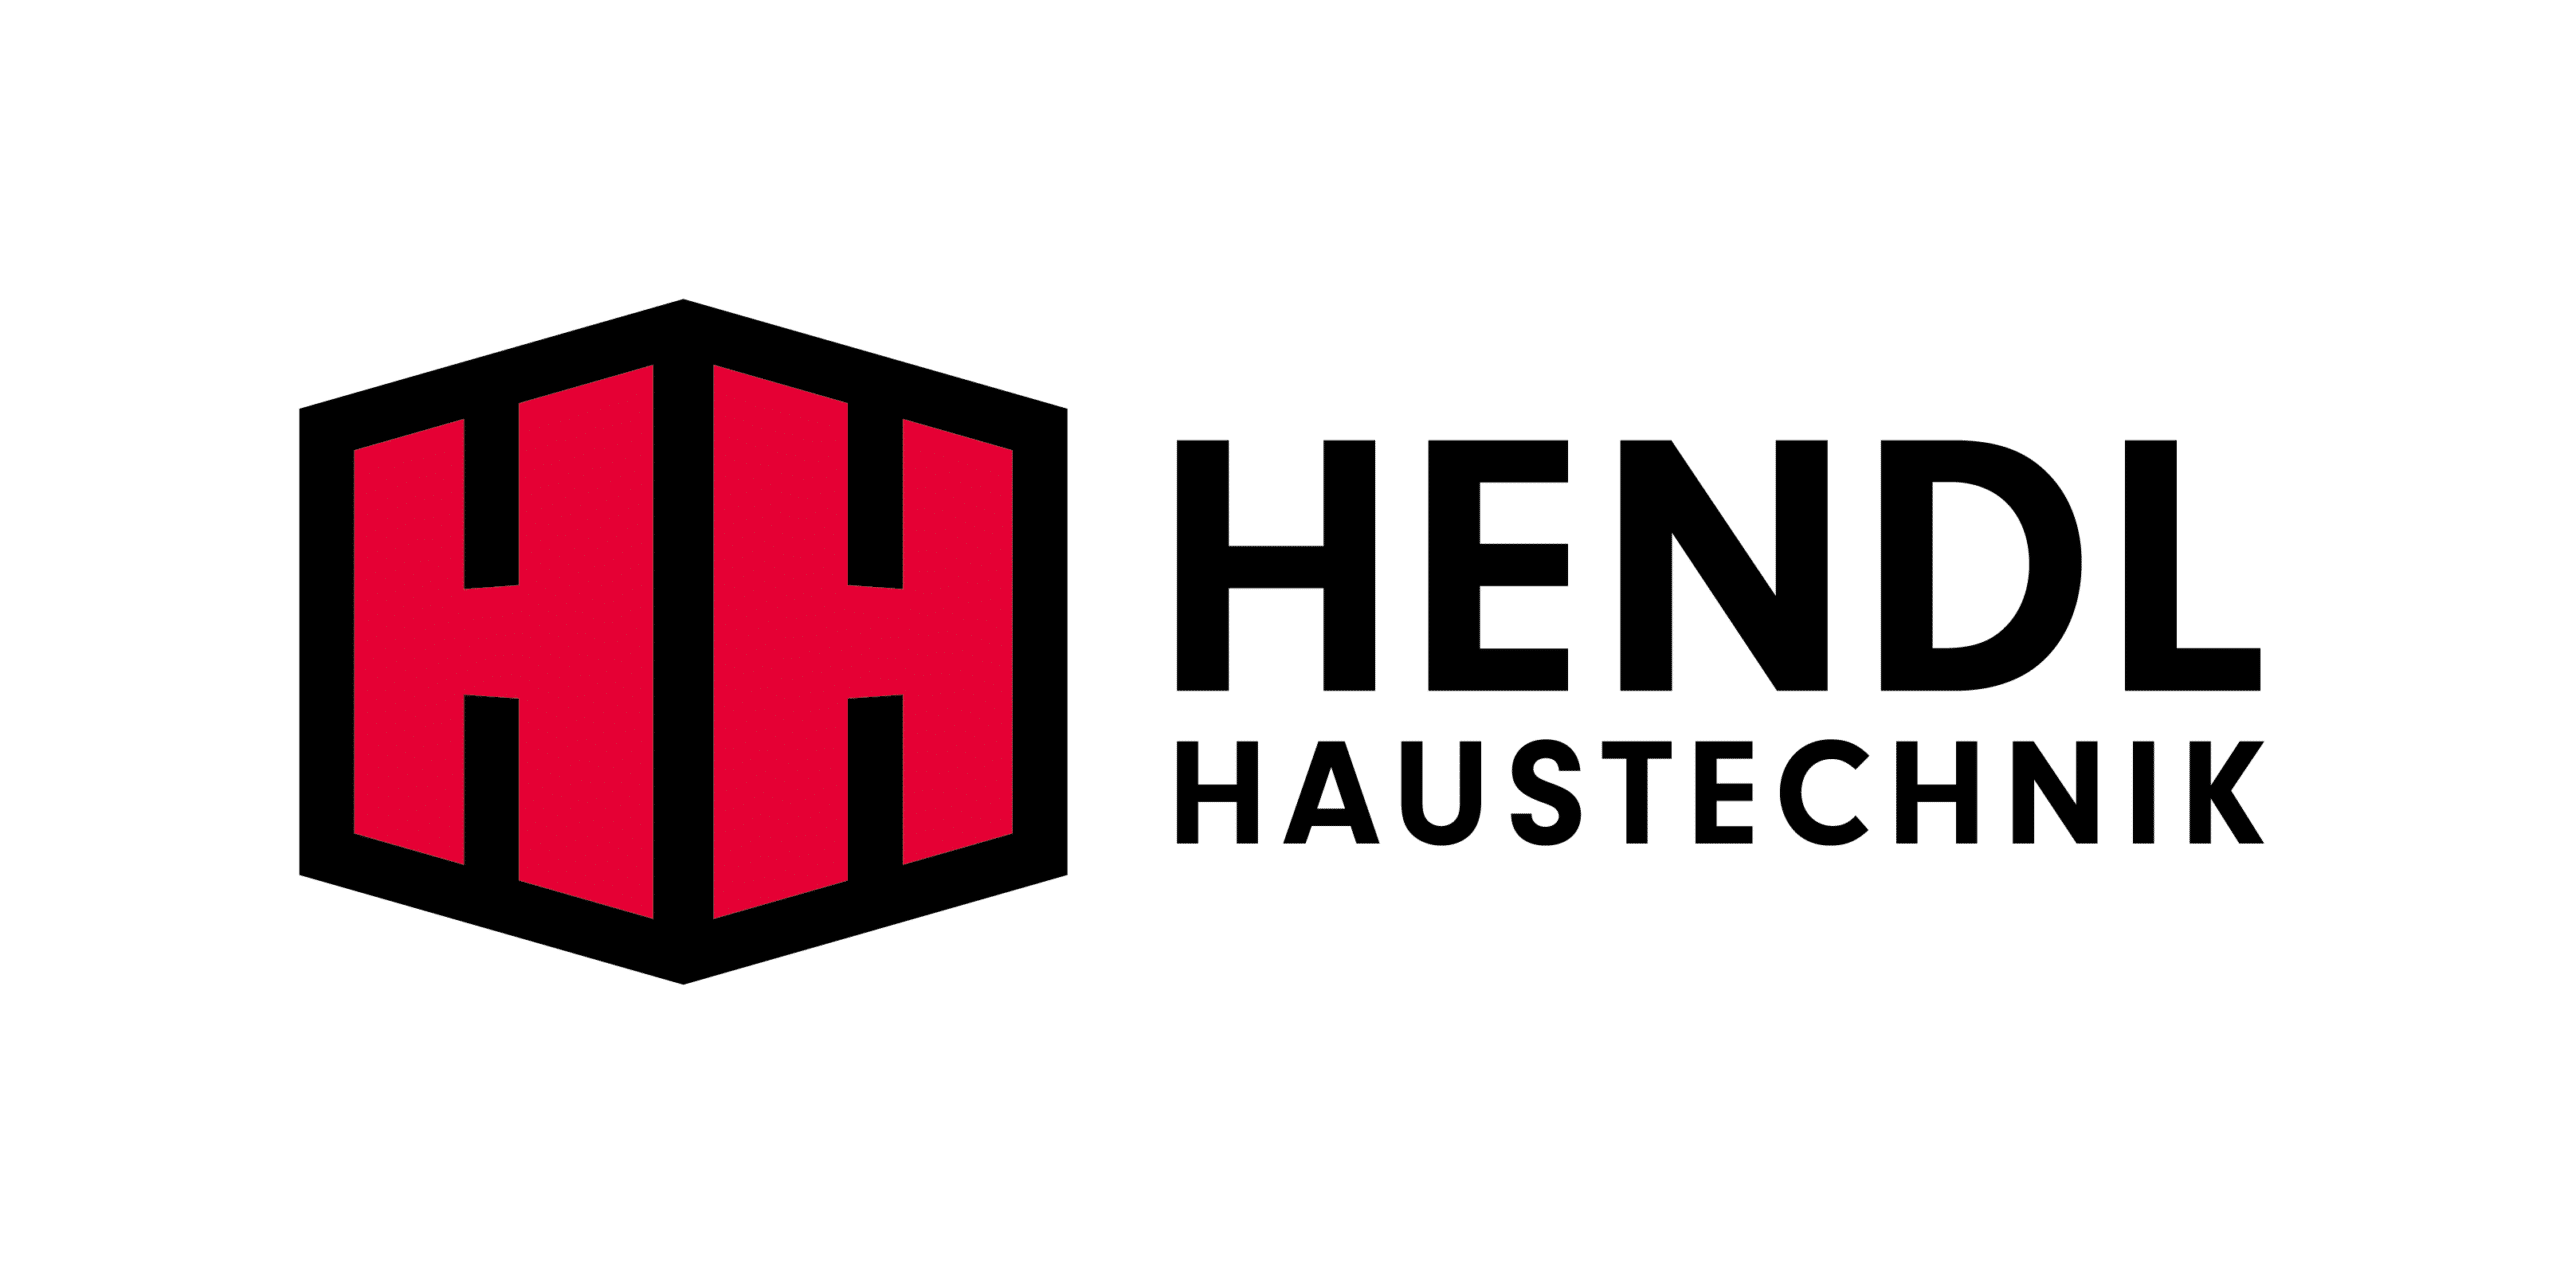 Logo Hendl Haustechnik GesmbH